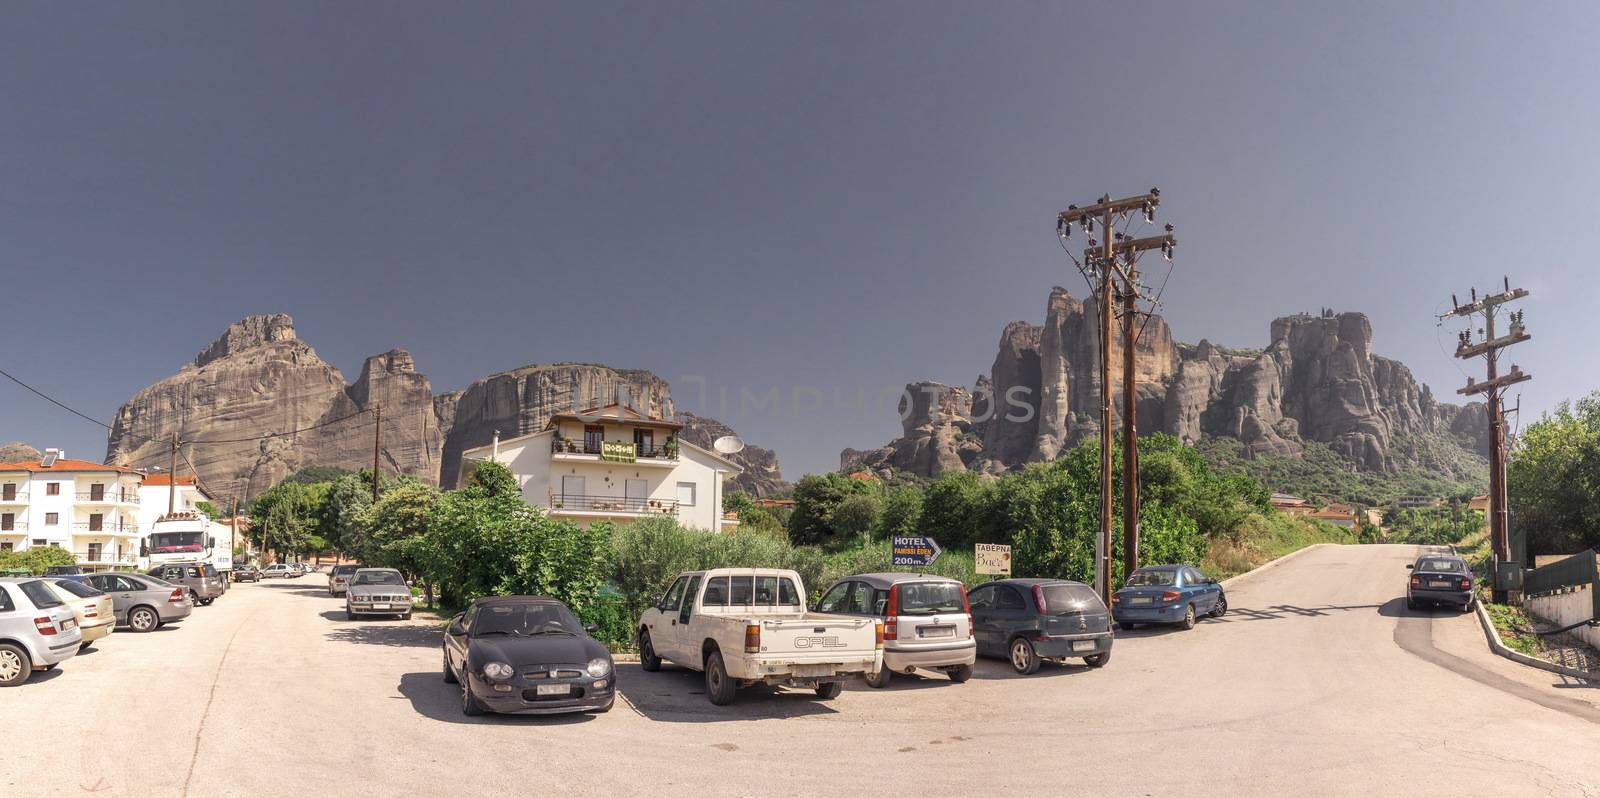 Town of Kalambaka in Greece by Multipedia